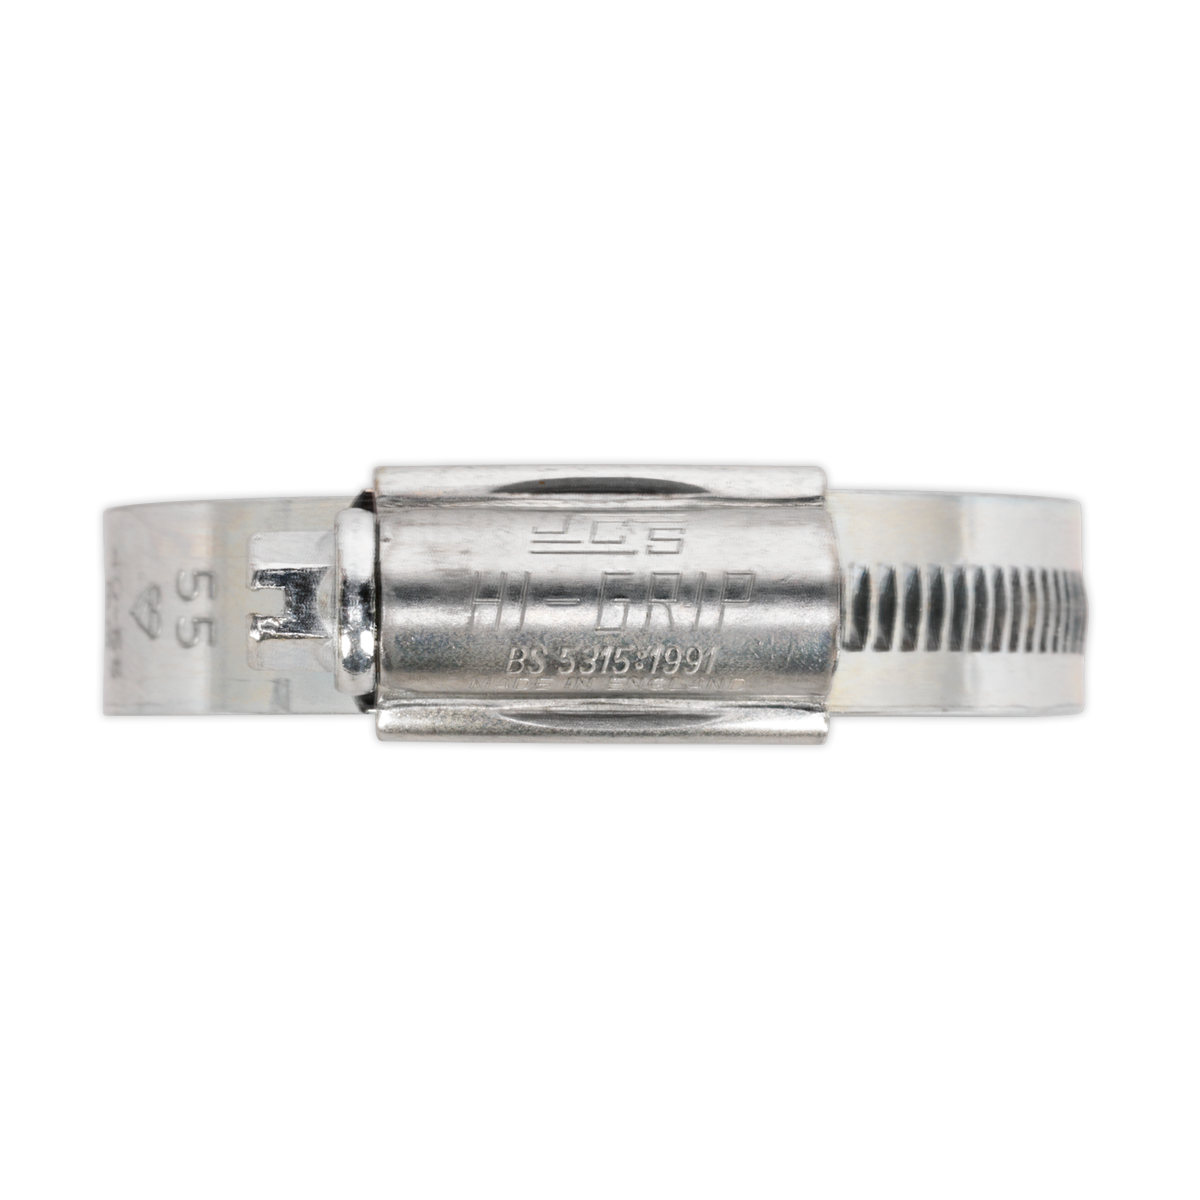 Sealey HCJ1X HI-GRIP® Hose Clip Zinc Plated Ø30-40mm Pack of 20